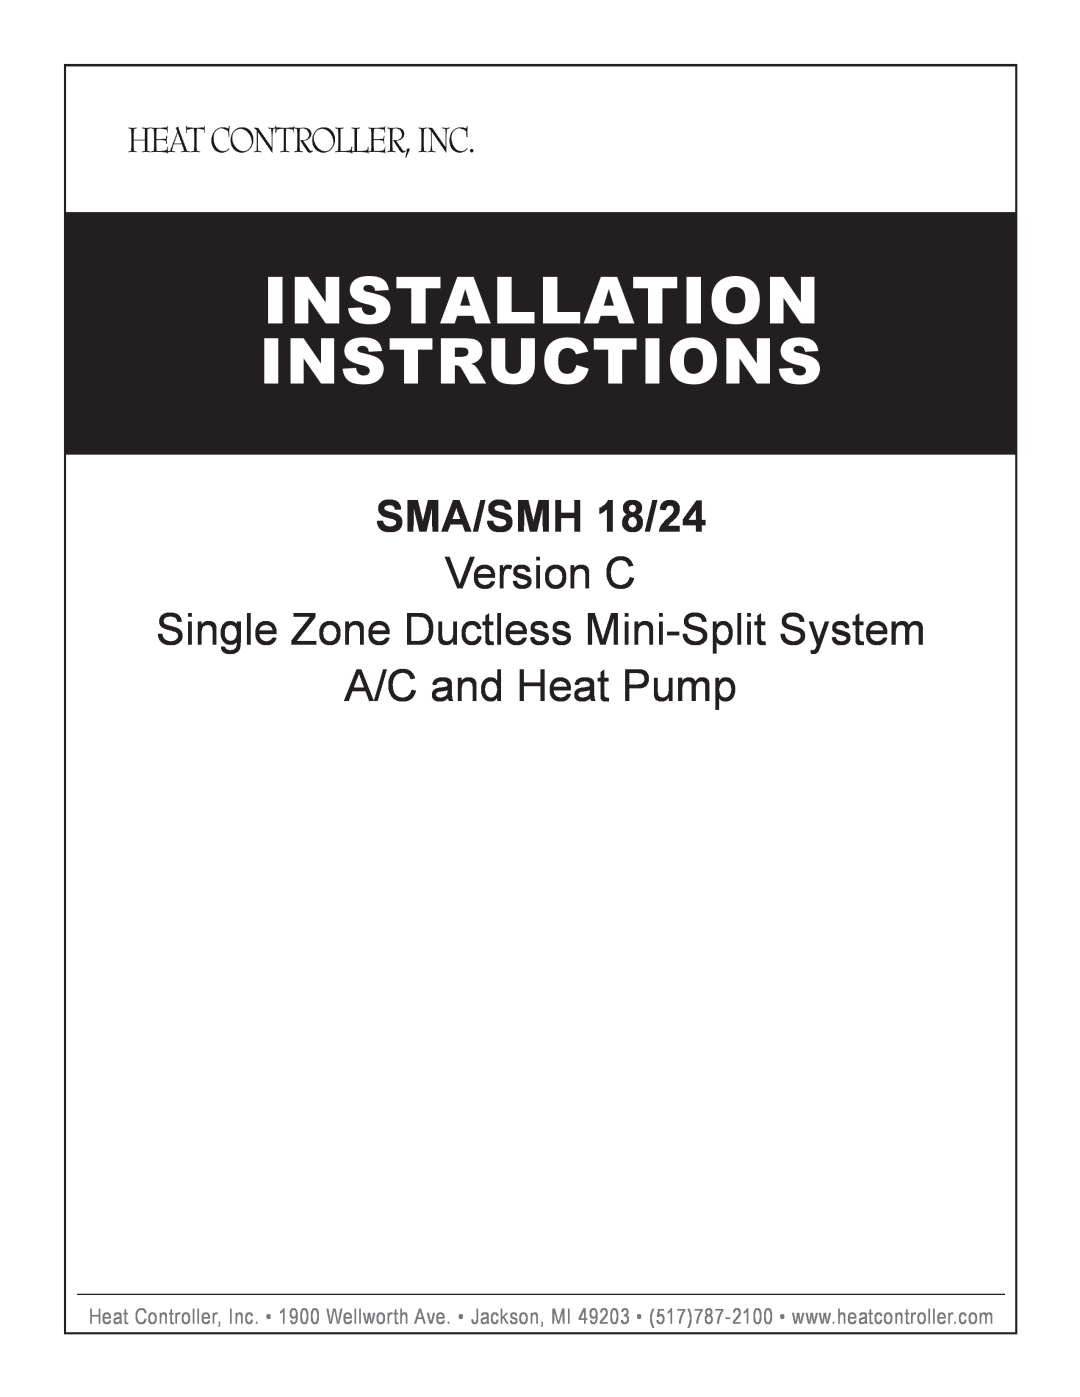 Heat Controller SMA 18 installation instructions Installation, Instructions, SMA/SMH 18/24, A/C and Heat Pump 